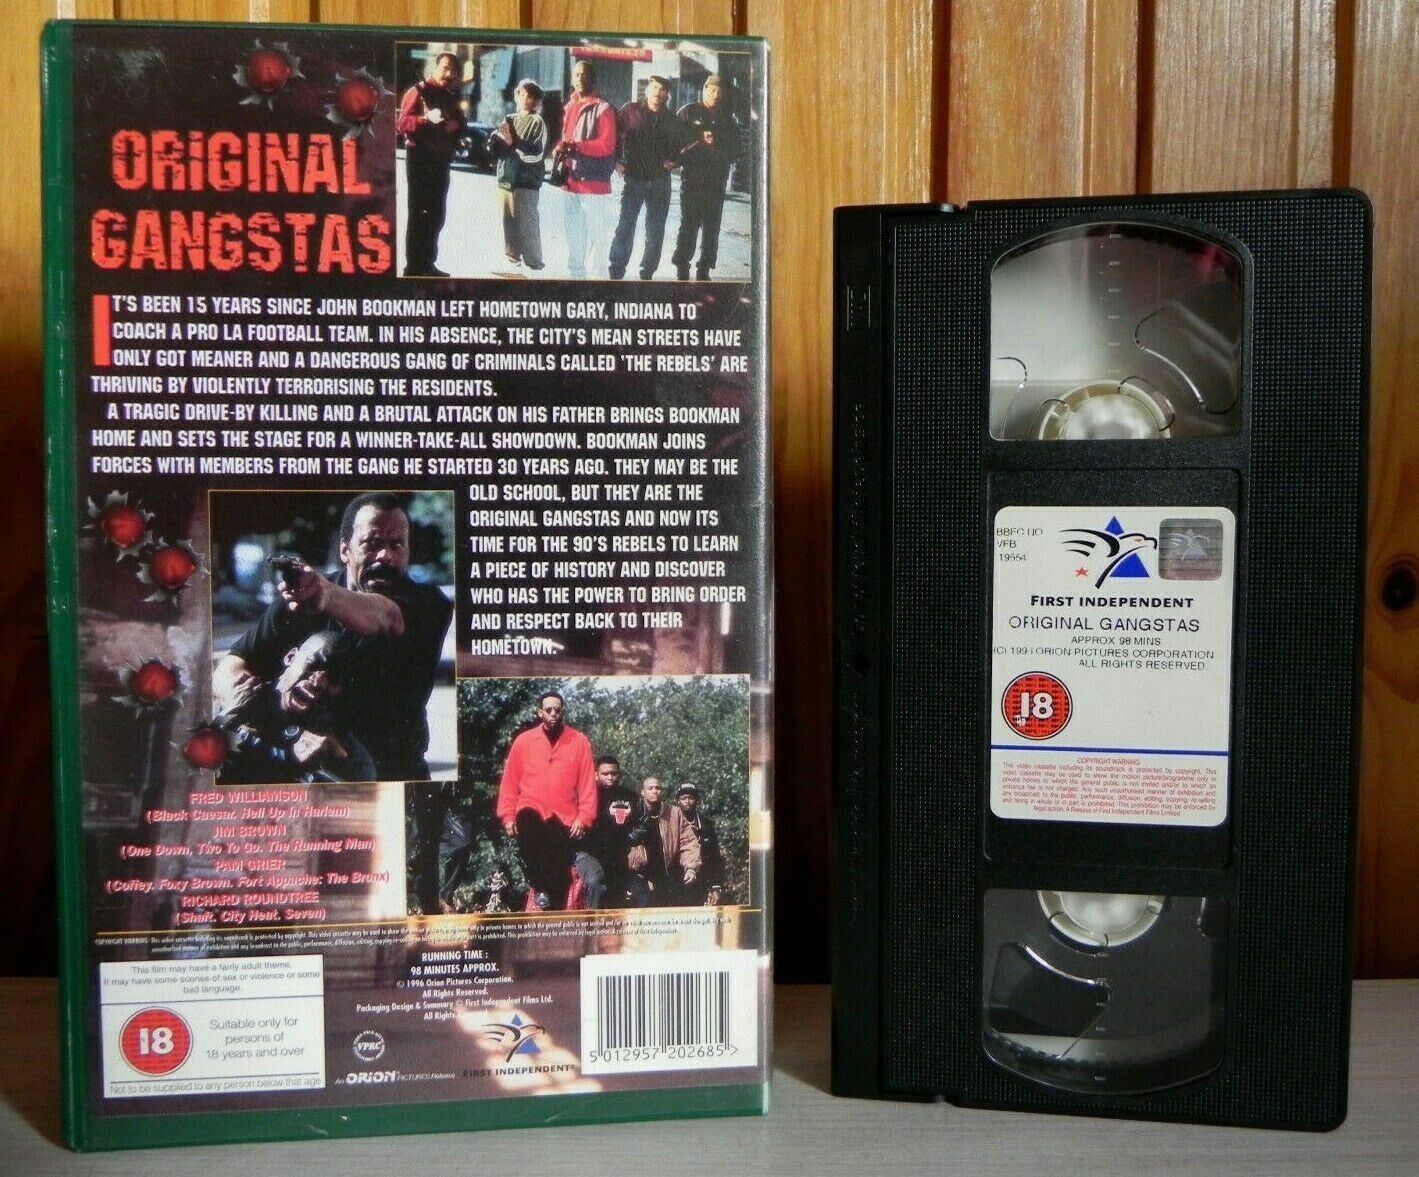 Original Gangsters (1996): Action/Gangster Movie - Large Box - Pam Grier - VHS-